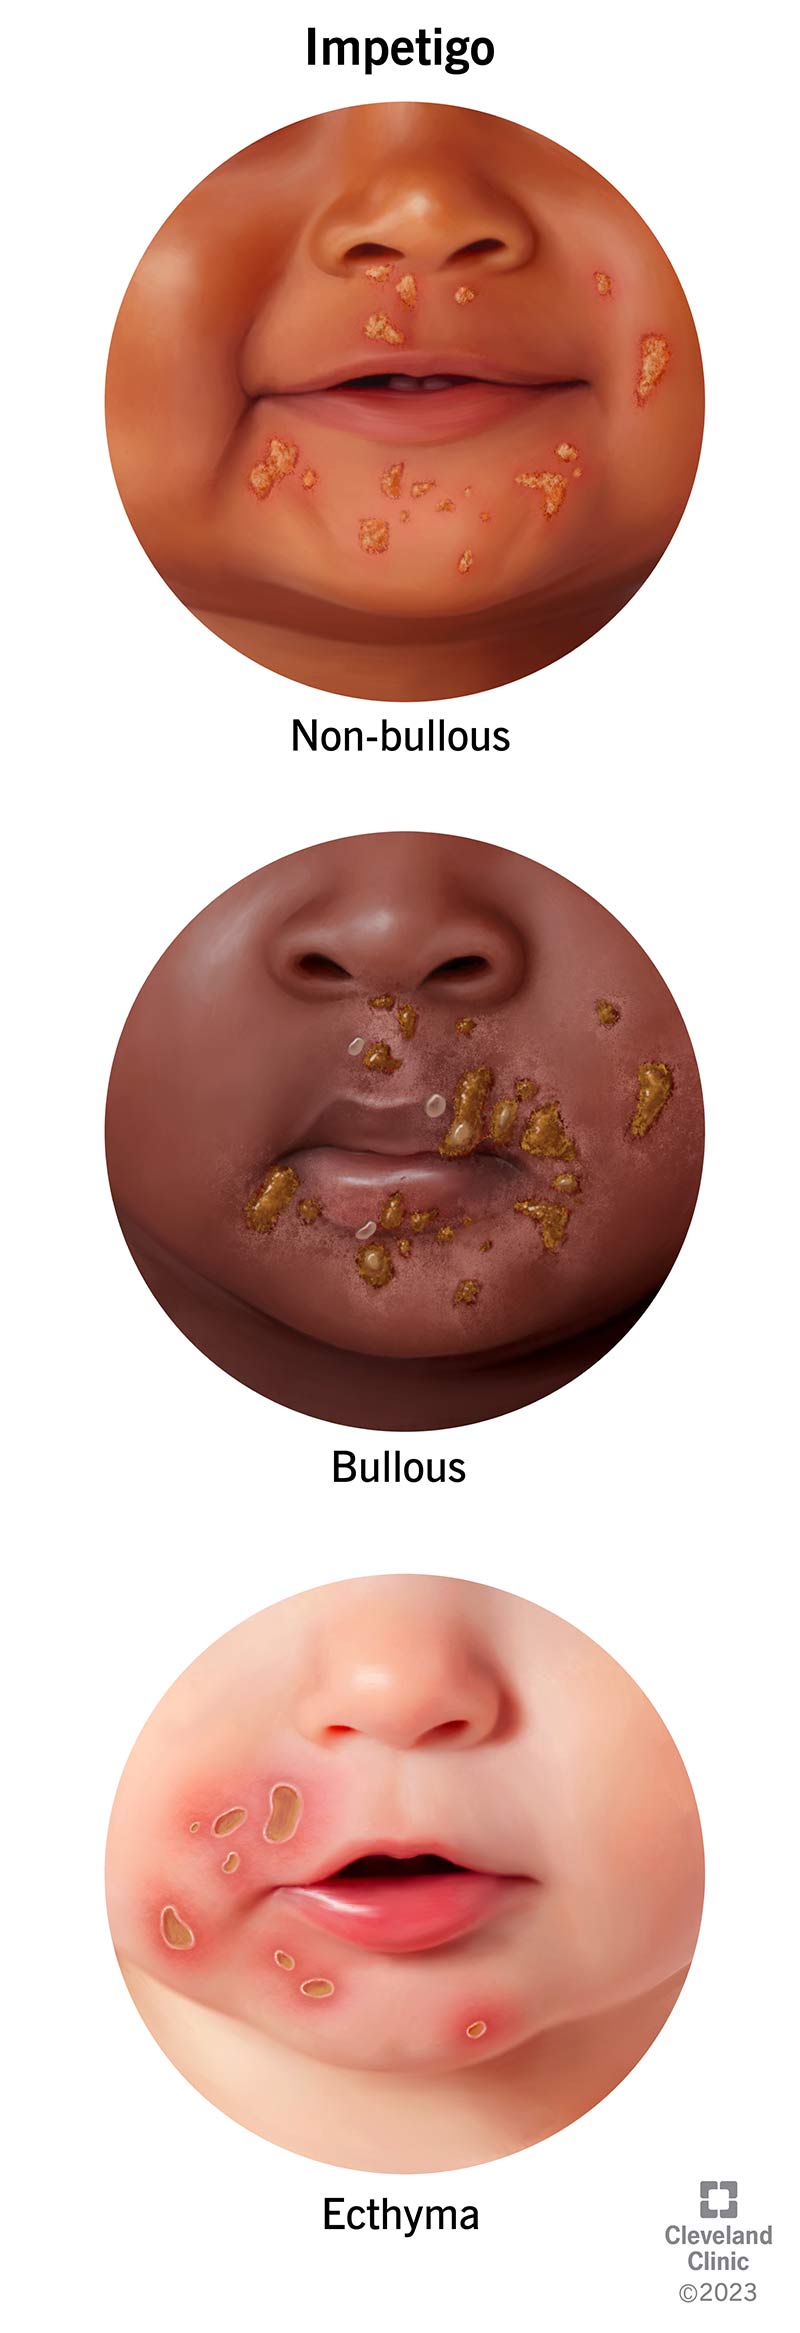 The three stages of impetigo: non-bullous, bullous and ecthyma.